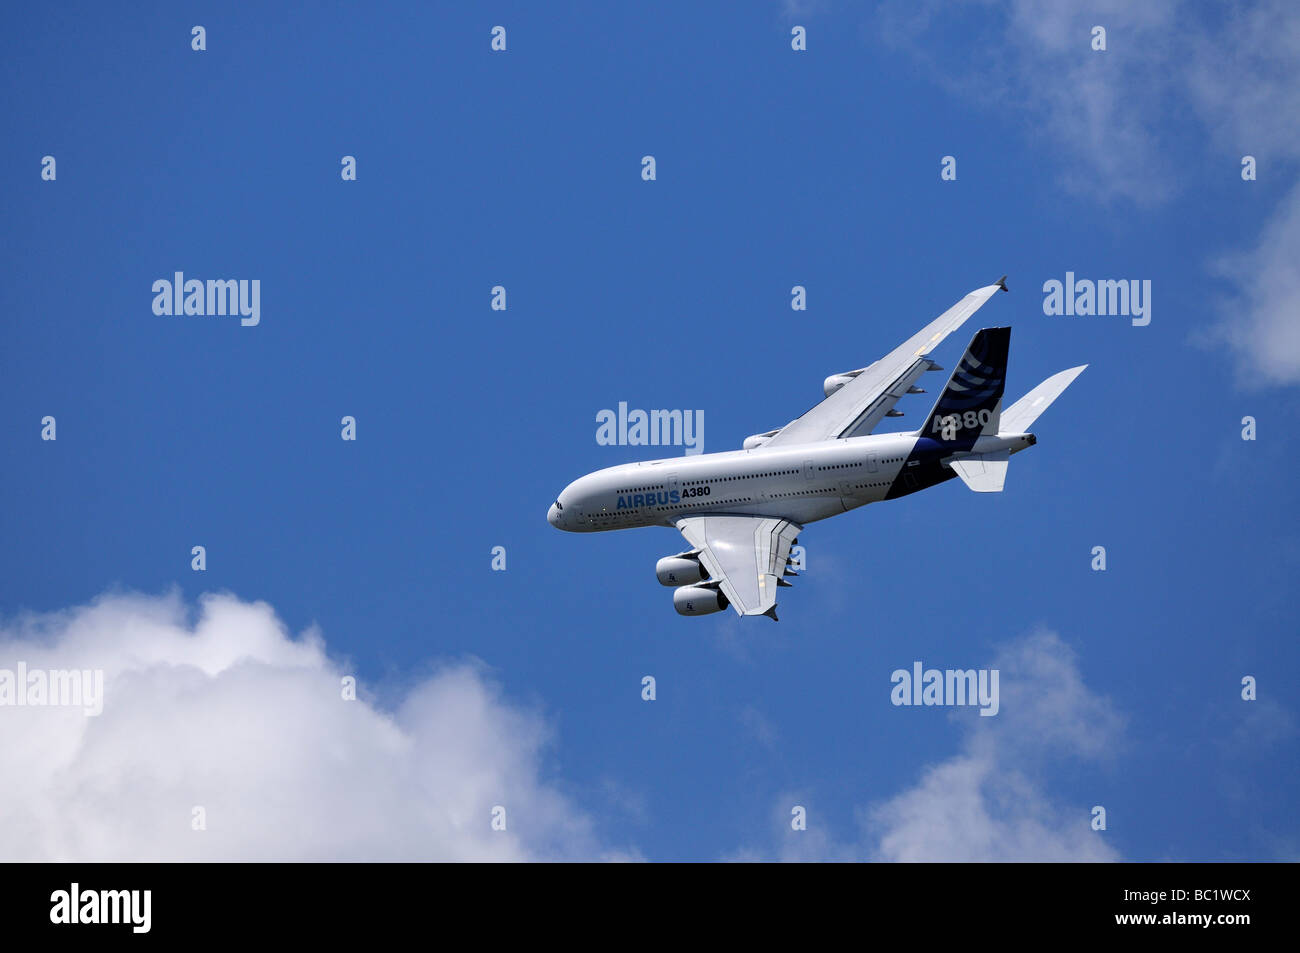 Airbus A380 airliner passenger plane at Air Show Paris Le Bourget Stock Photo